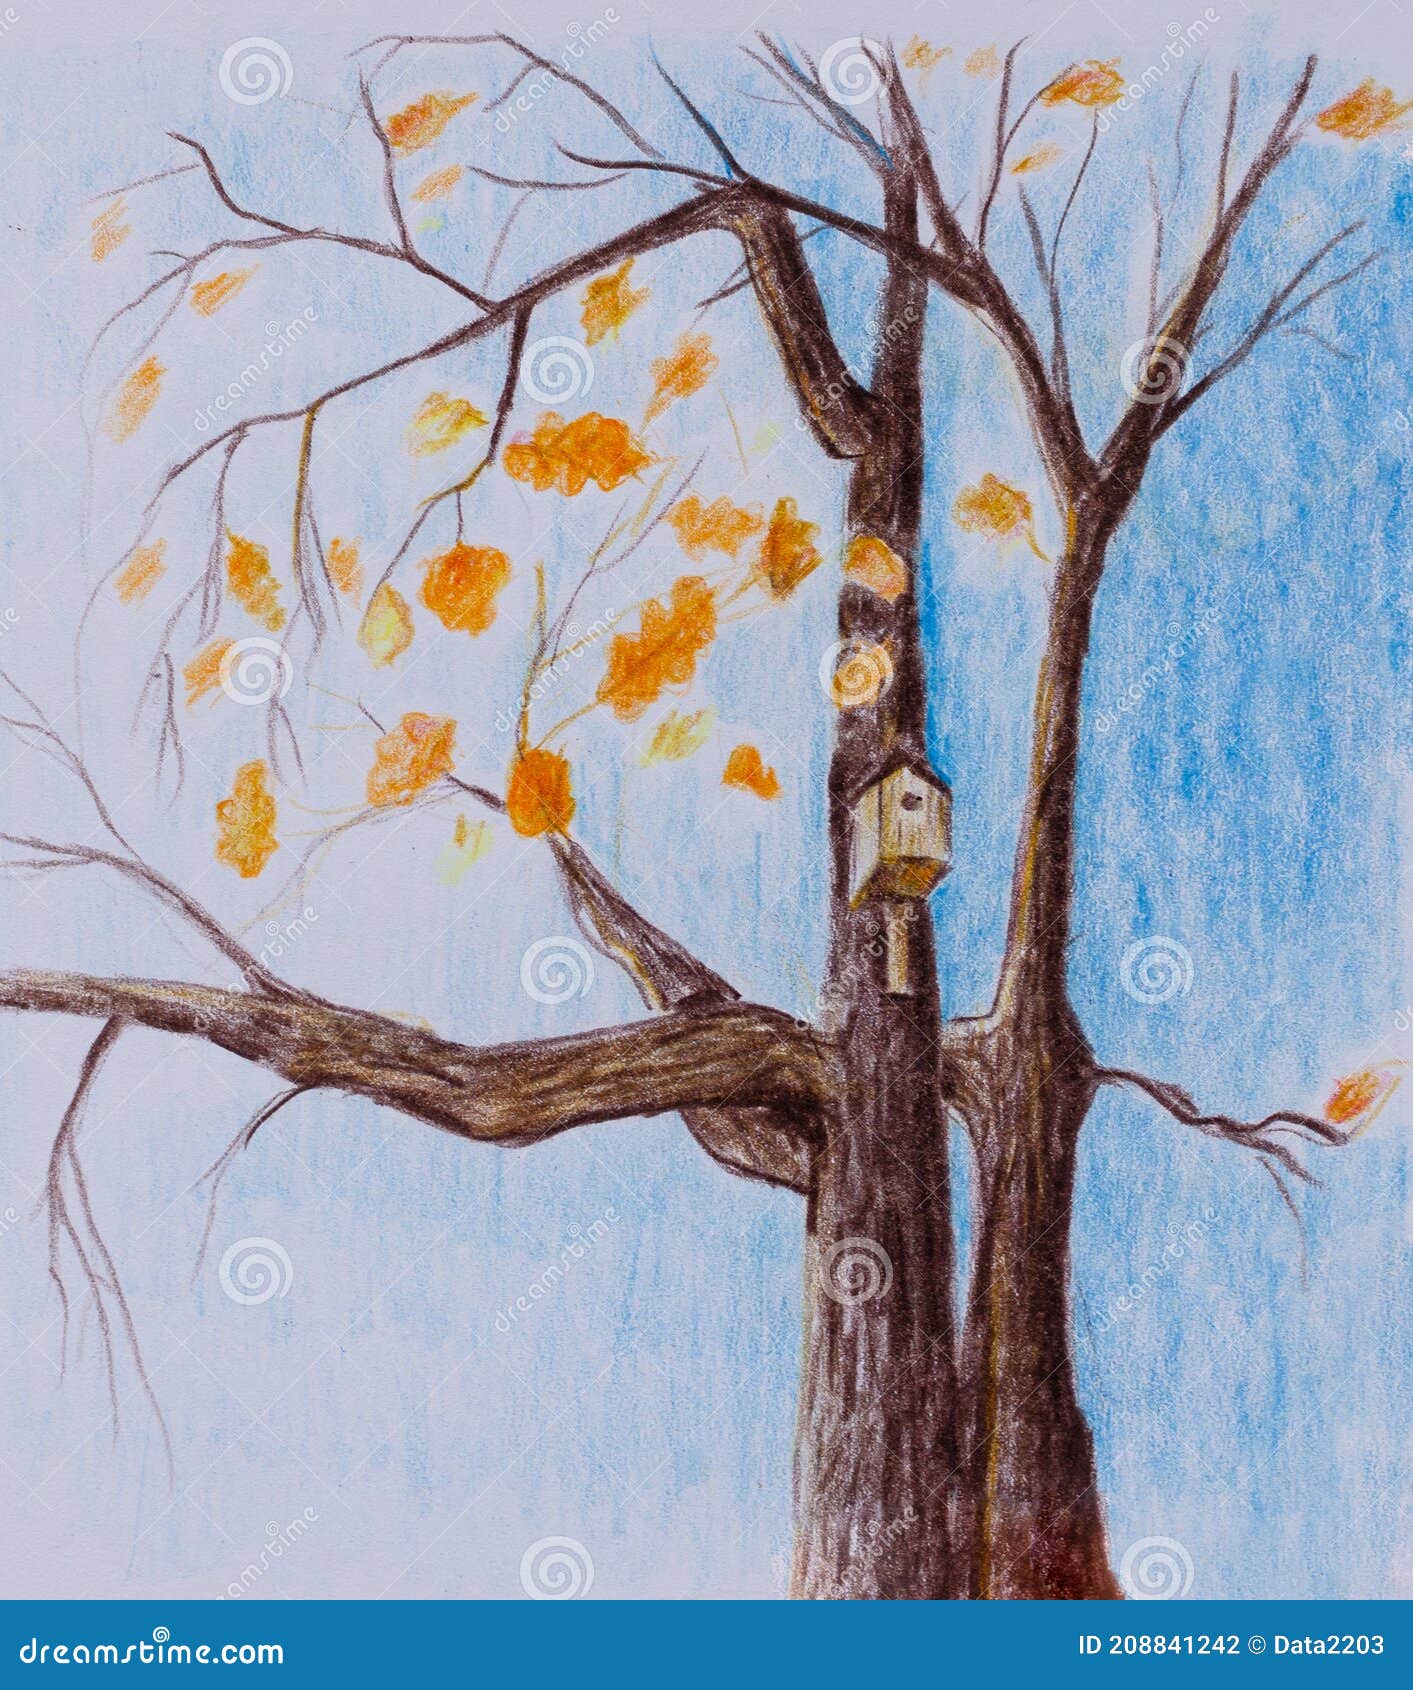 How to Draw Autumn Tree | Fall Tree Drawing | Autumn Season Painting -  YouTube